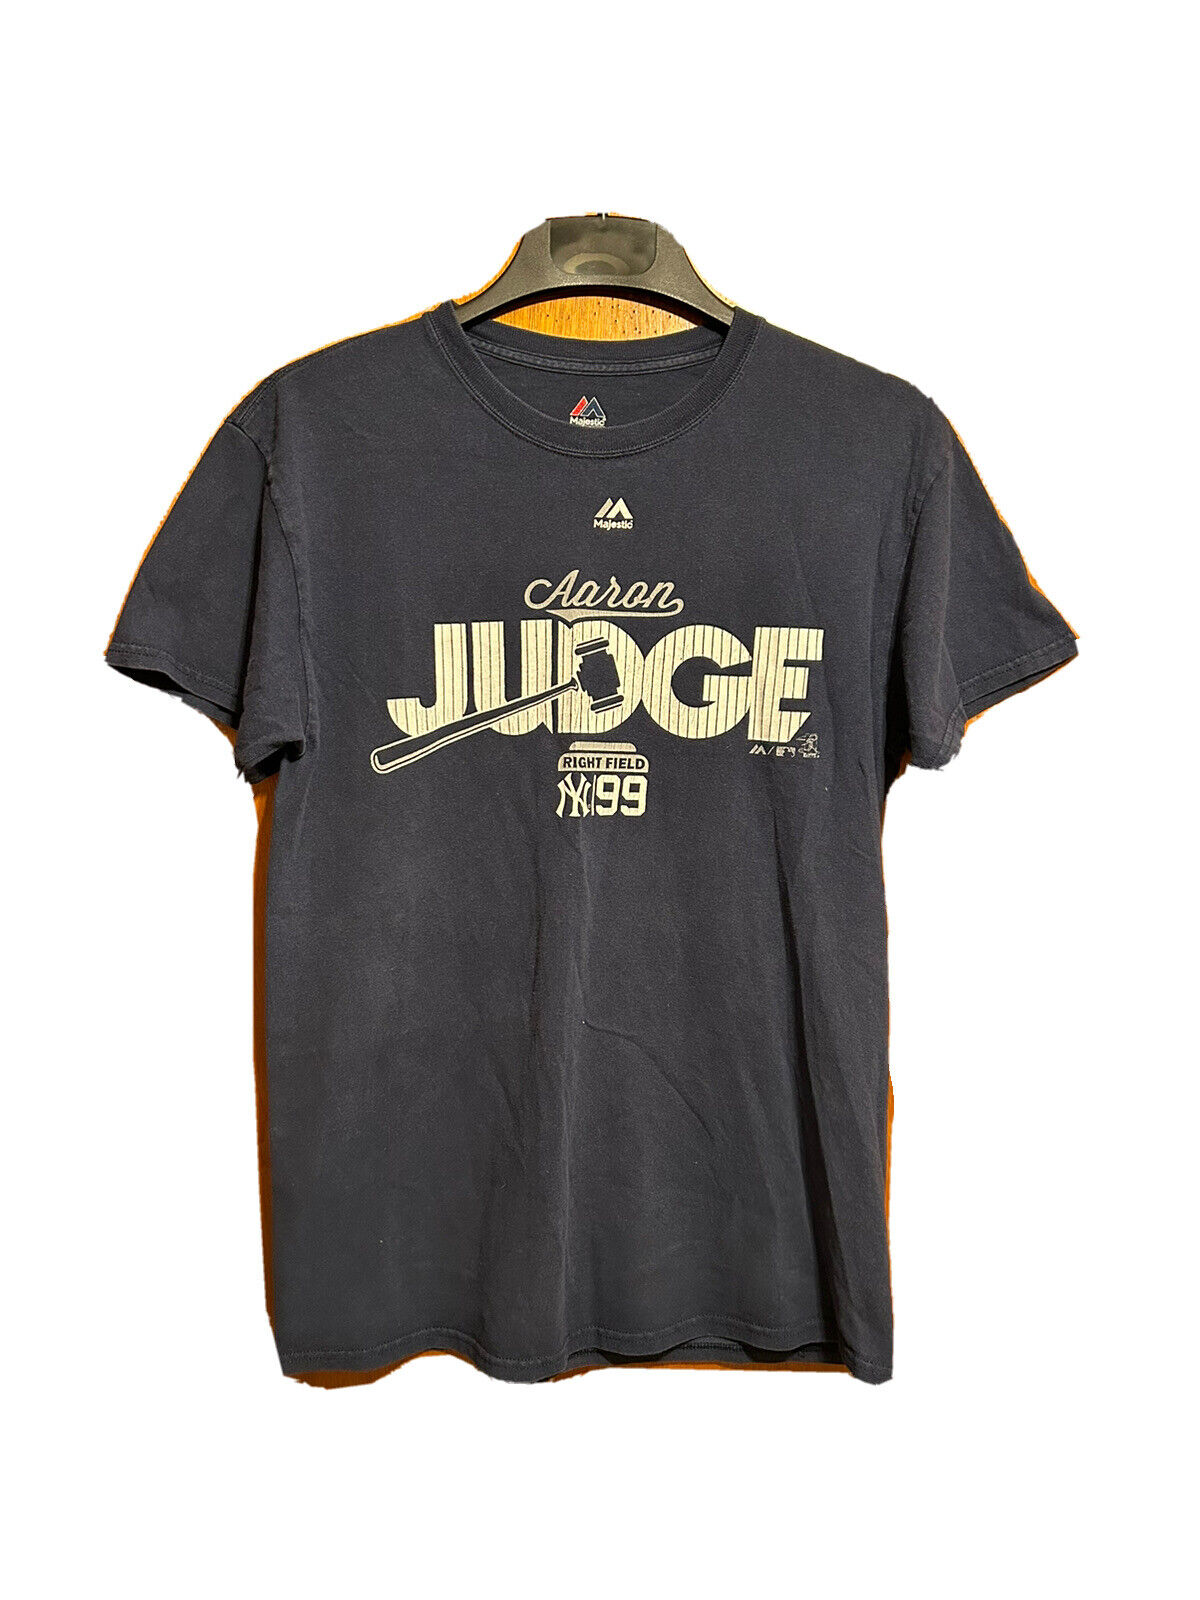 MLB Aaron Judge #99 Majestic T-Shirt Tee Men's Medium M Navy Blue Short  Sleeve